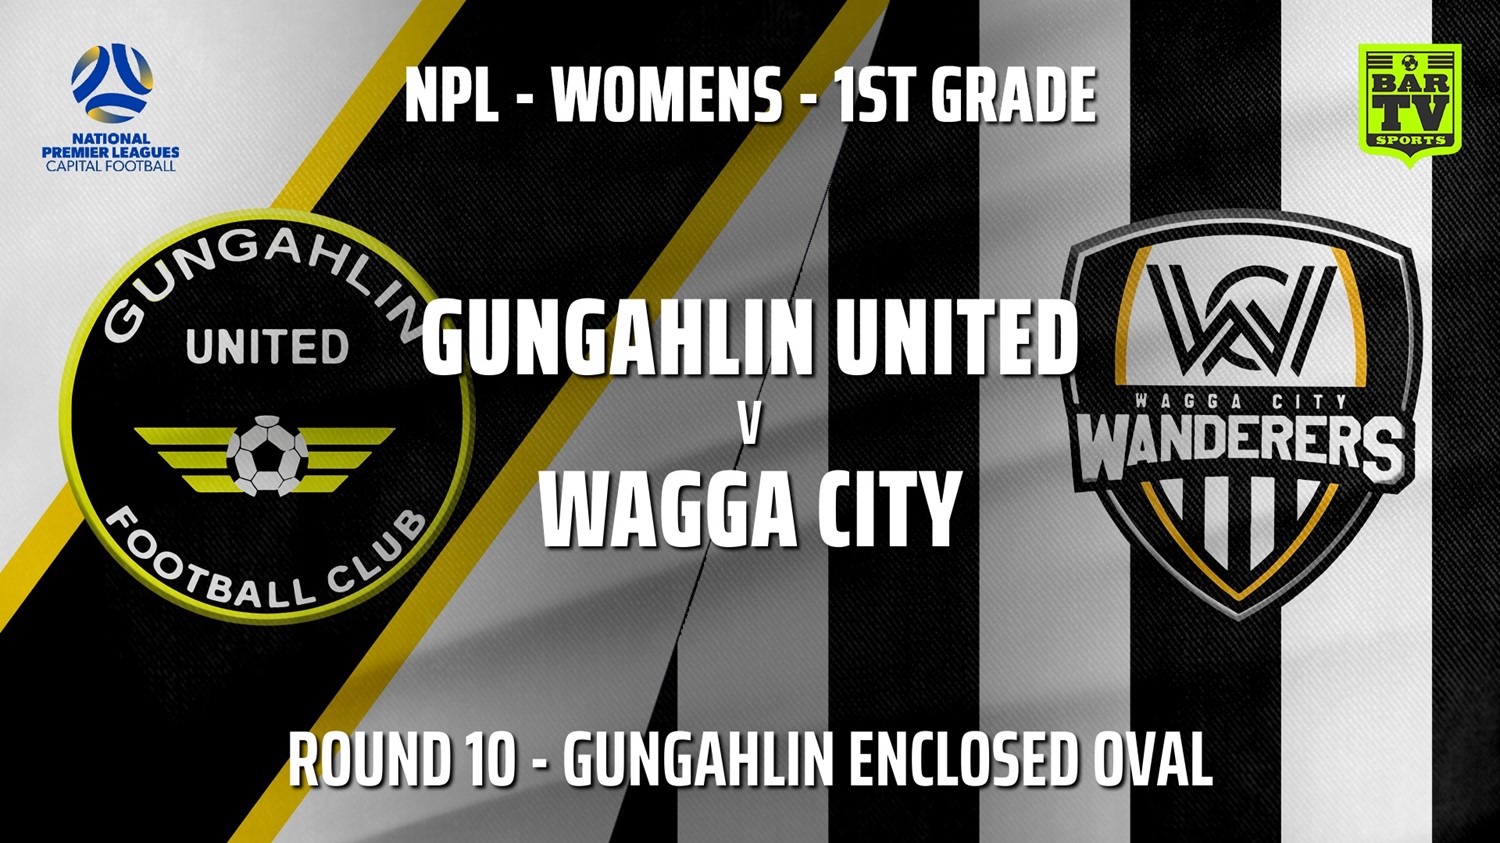 210620-Capital Womens Round 10 - Gungahlin United FC (women) v Wagga City Wanderers FC (women) Minigame Slate Image